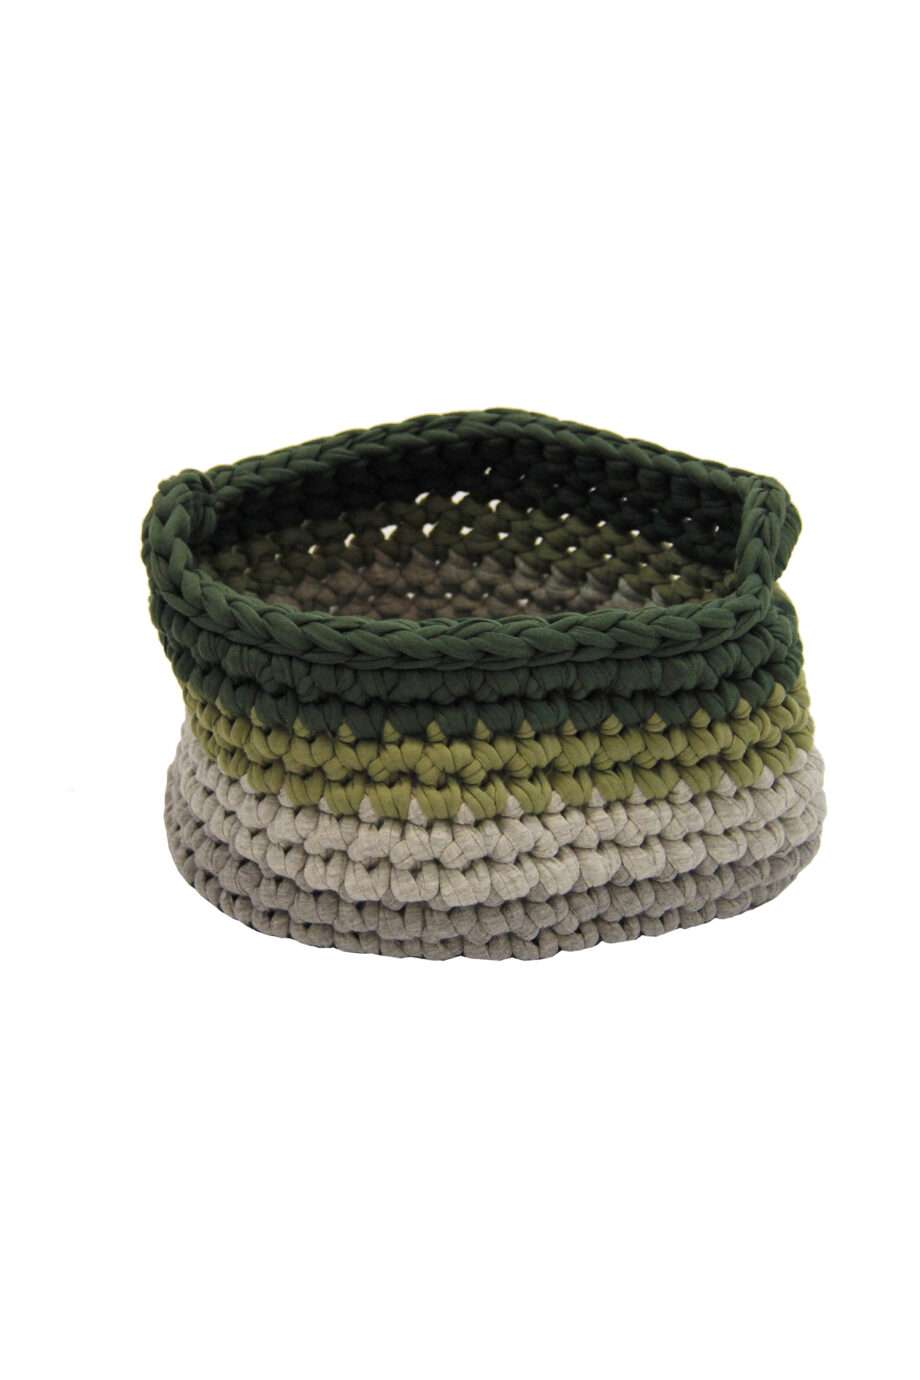 groovy olive green crochet cotton basket xxlarge